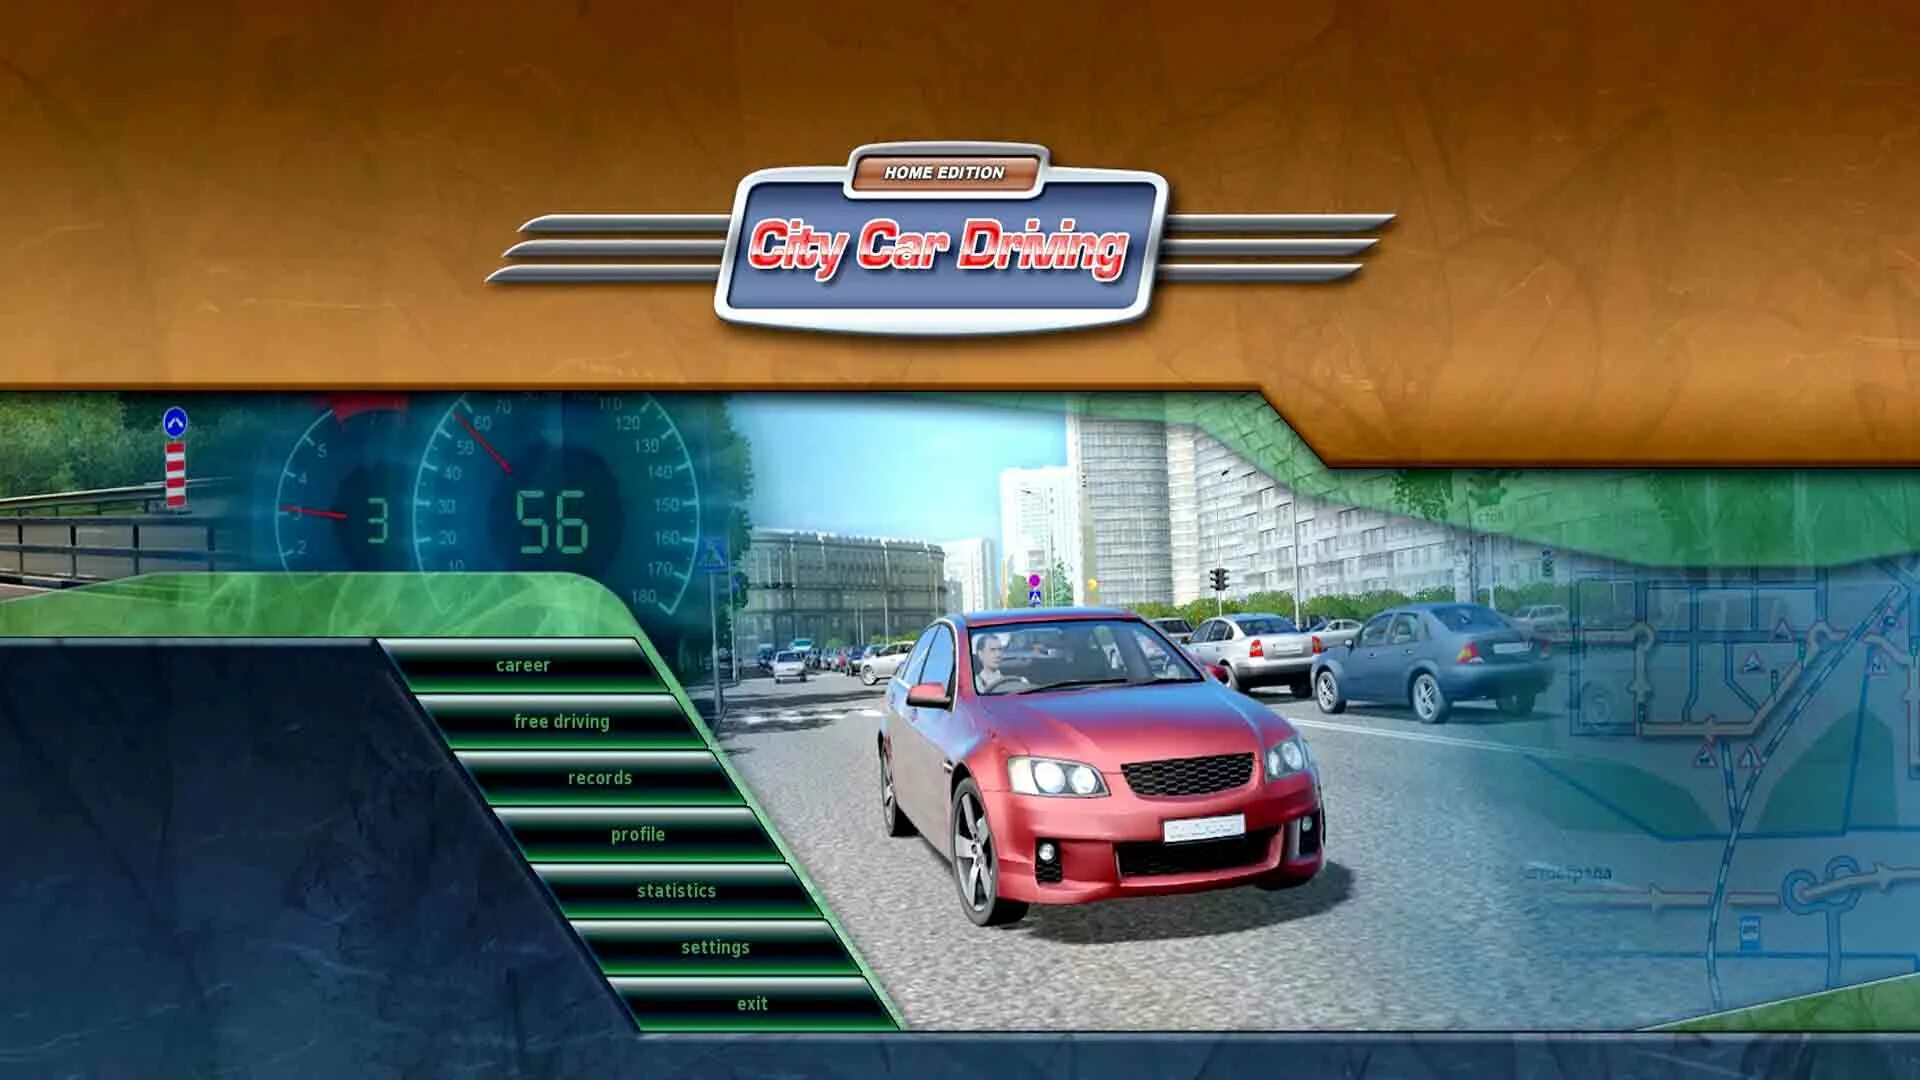 City car driving автомат. City car Driving диск. City car Driving 2020 ПК. Диск City car Driving на Xbox one. City car Driving меню.